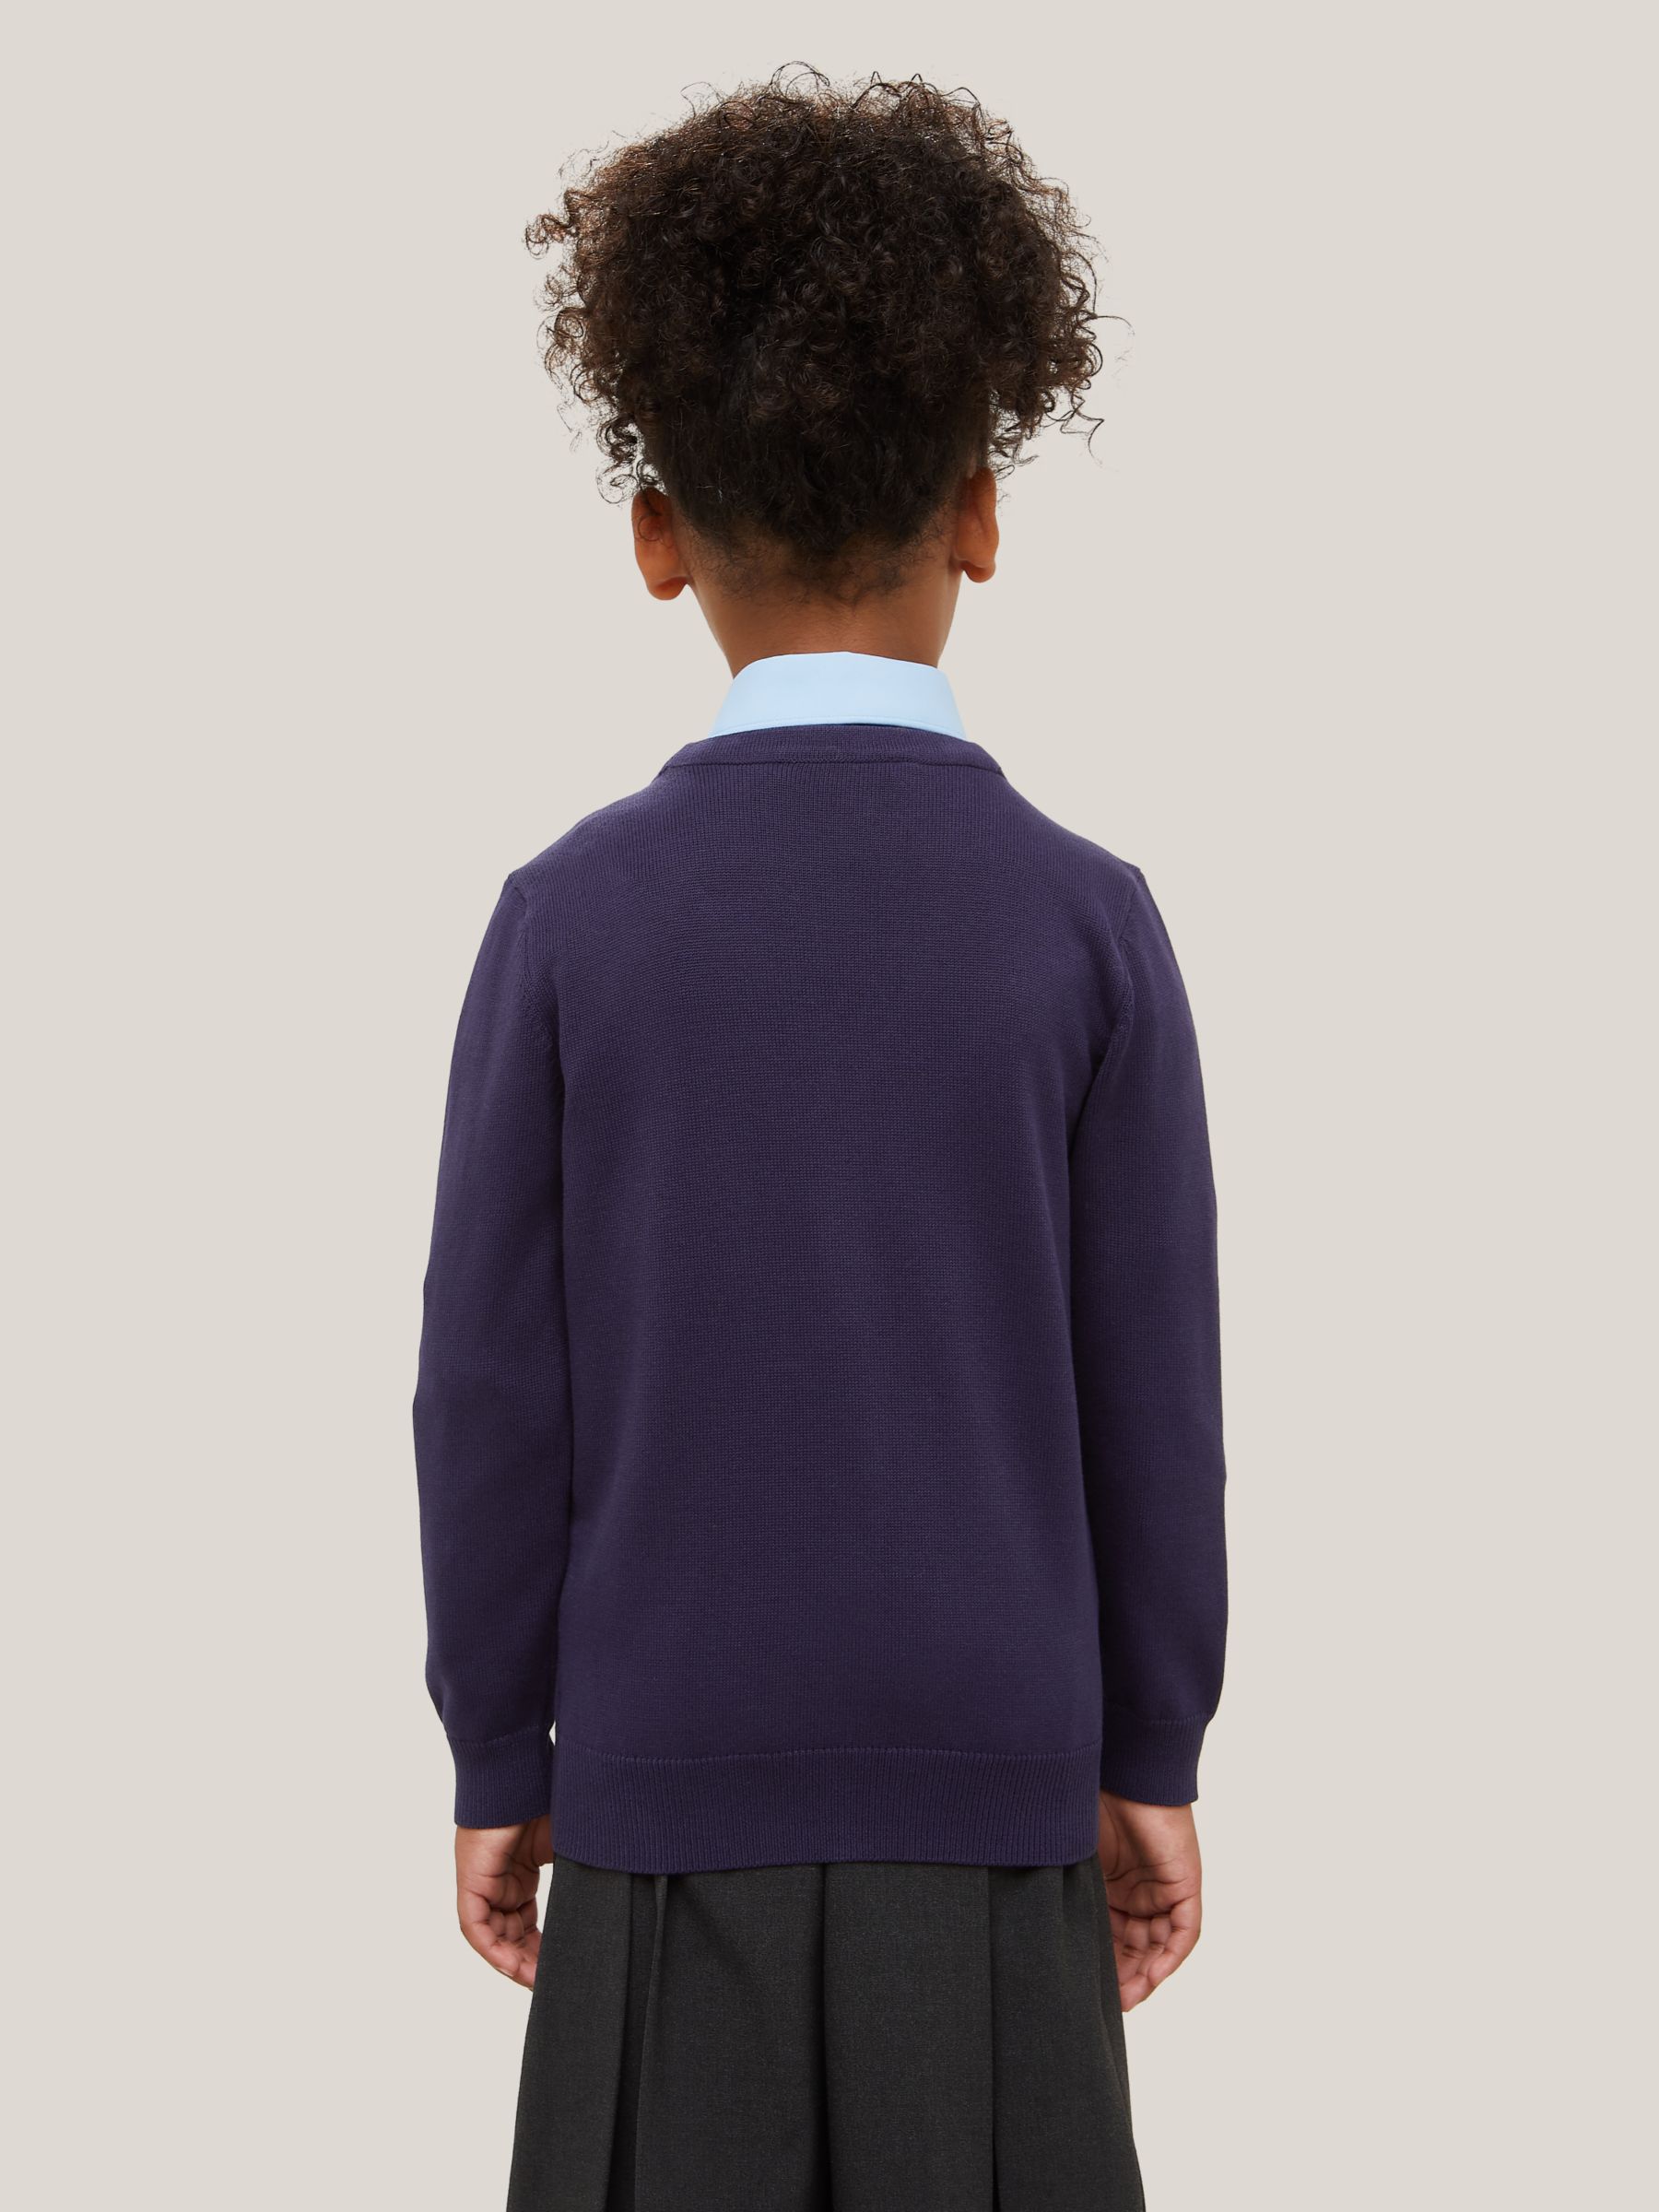 John Lewis & Partners Girls' Cotton Double Pocket Easy Care Cardigan